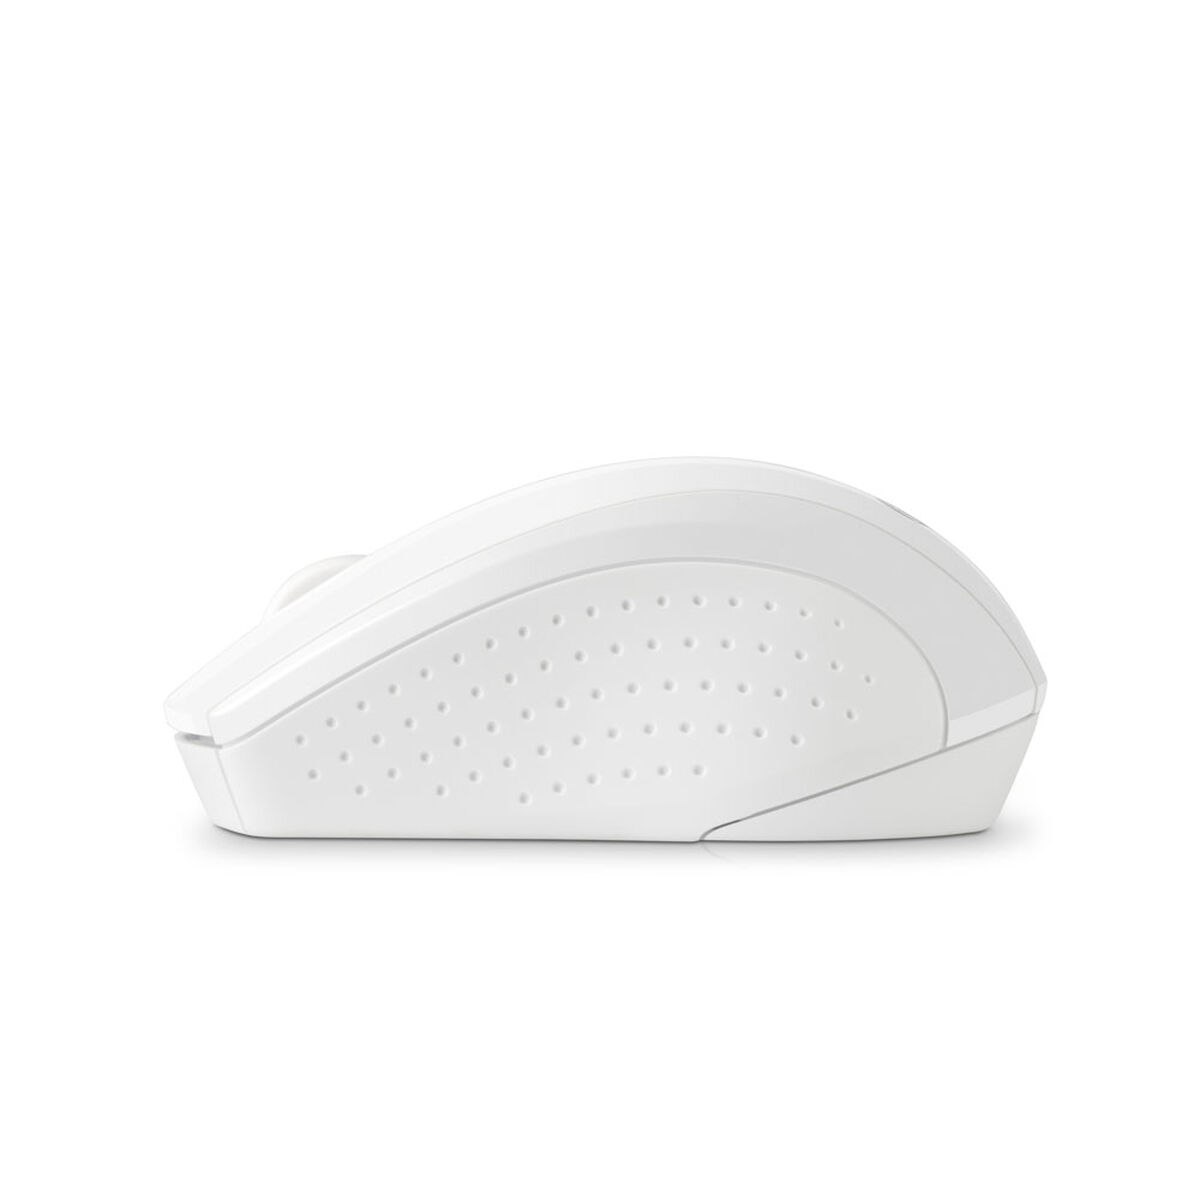 Mouse Láser Inalámbrico HP Wireless X3000